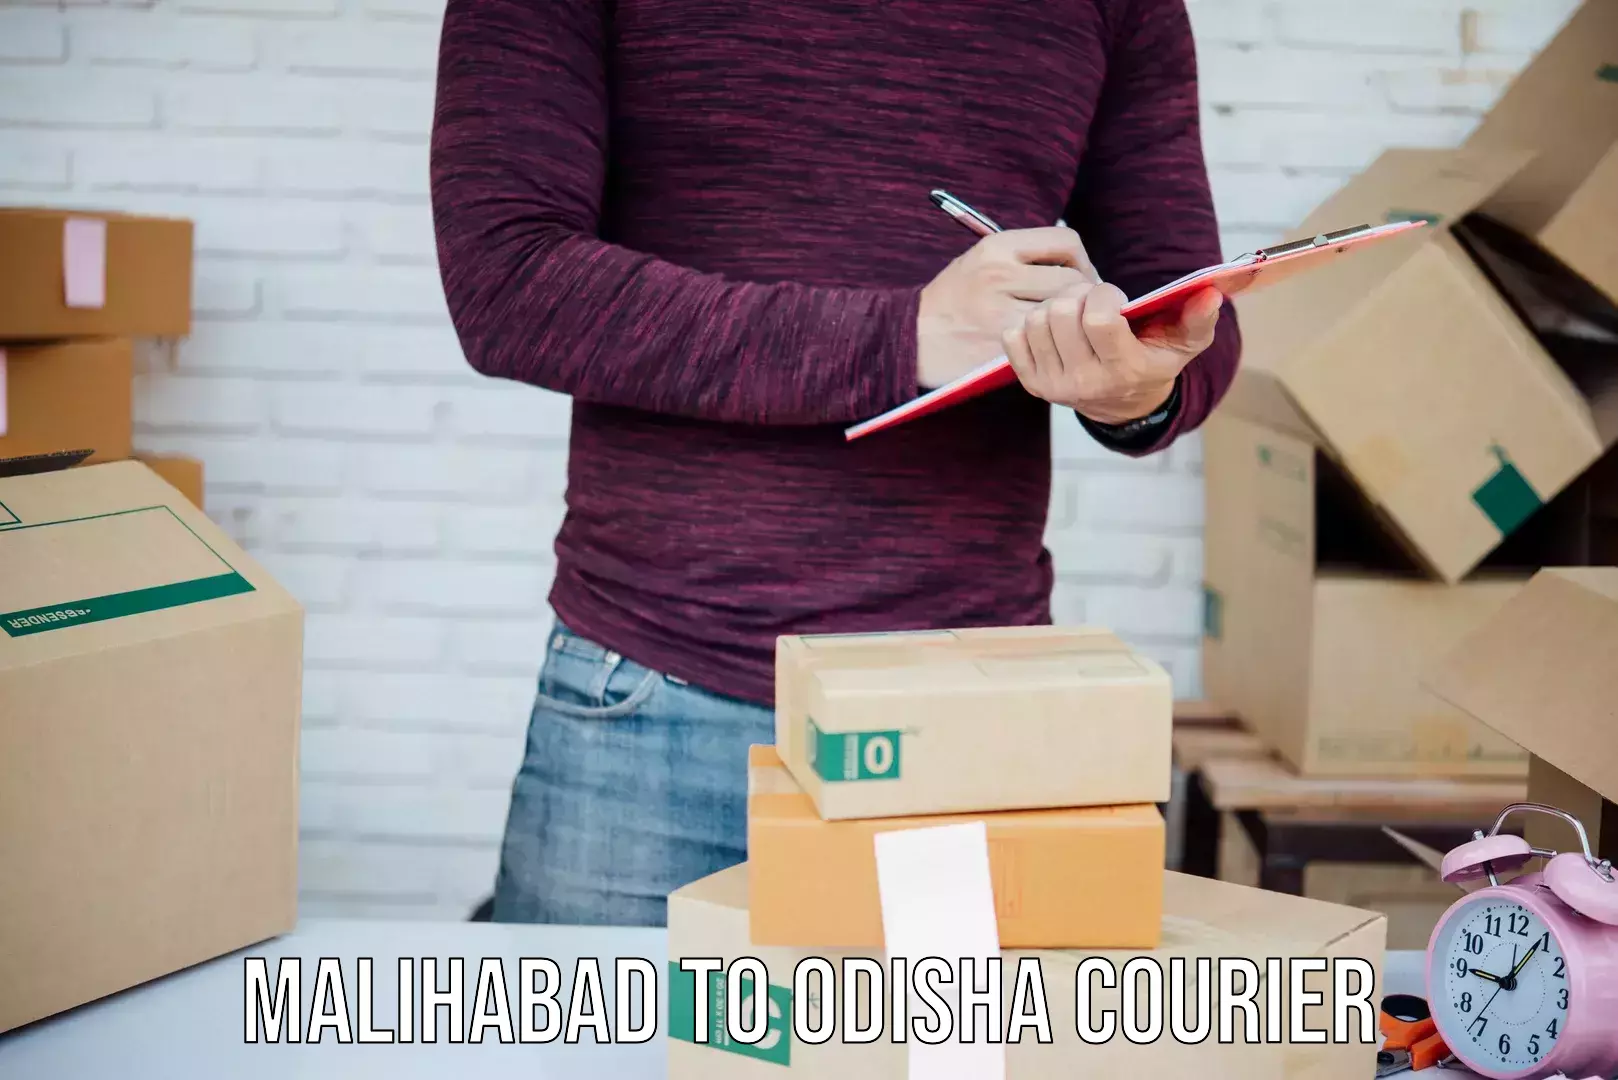 Efficient order fulfillment Malihabad to Odisha